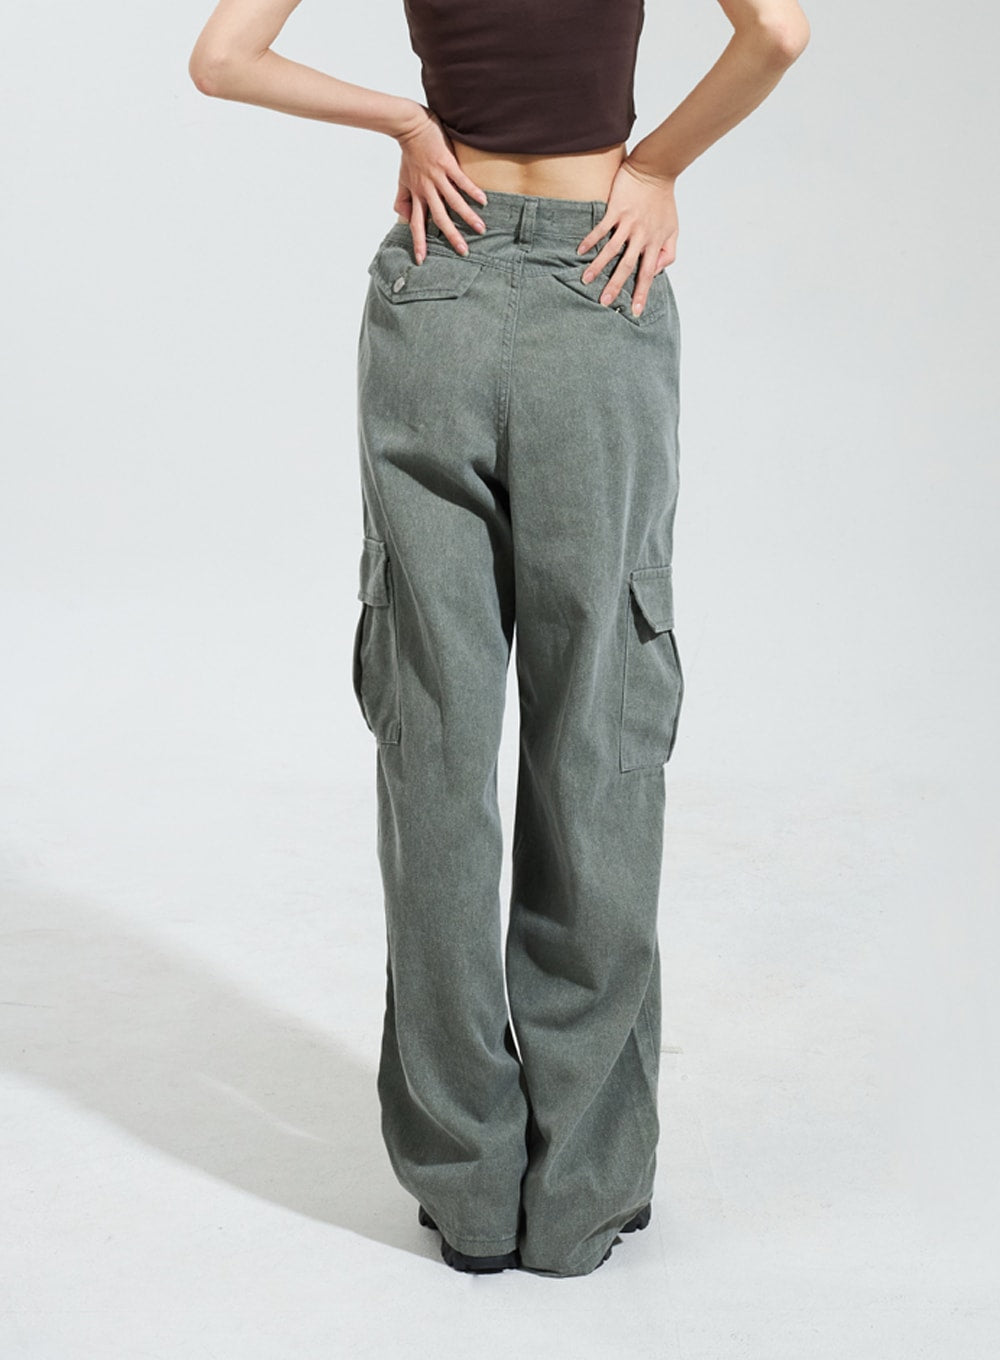 V Cut Pocket Cargo Pants  Cargo pants women, Pants for women, High waisted  pants